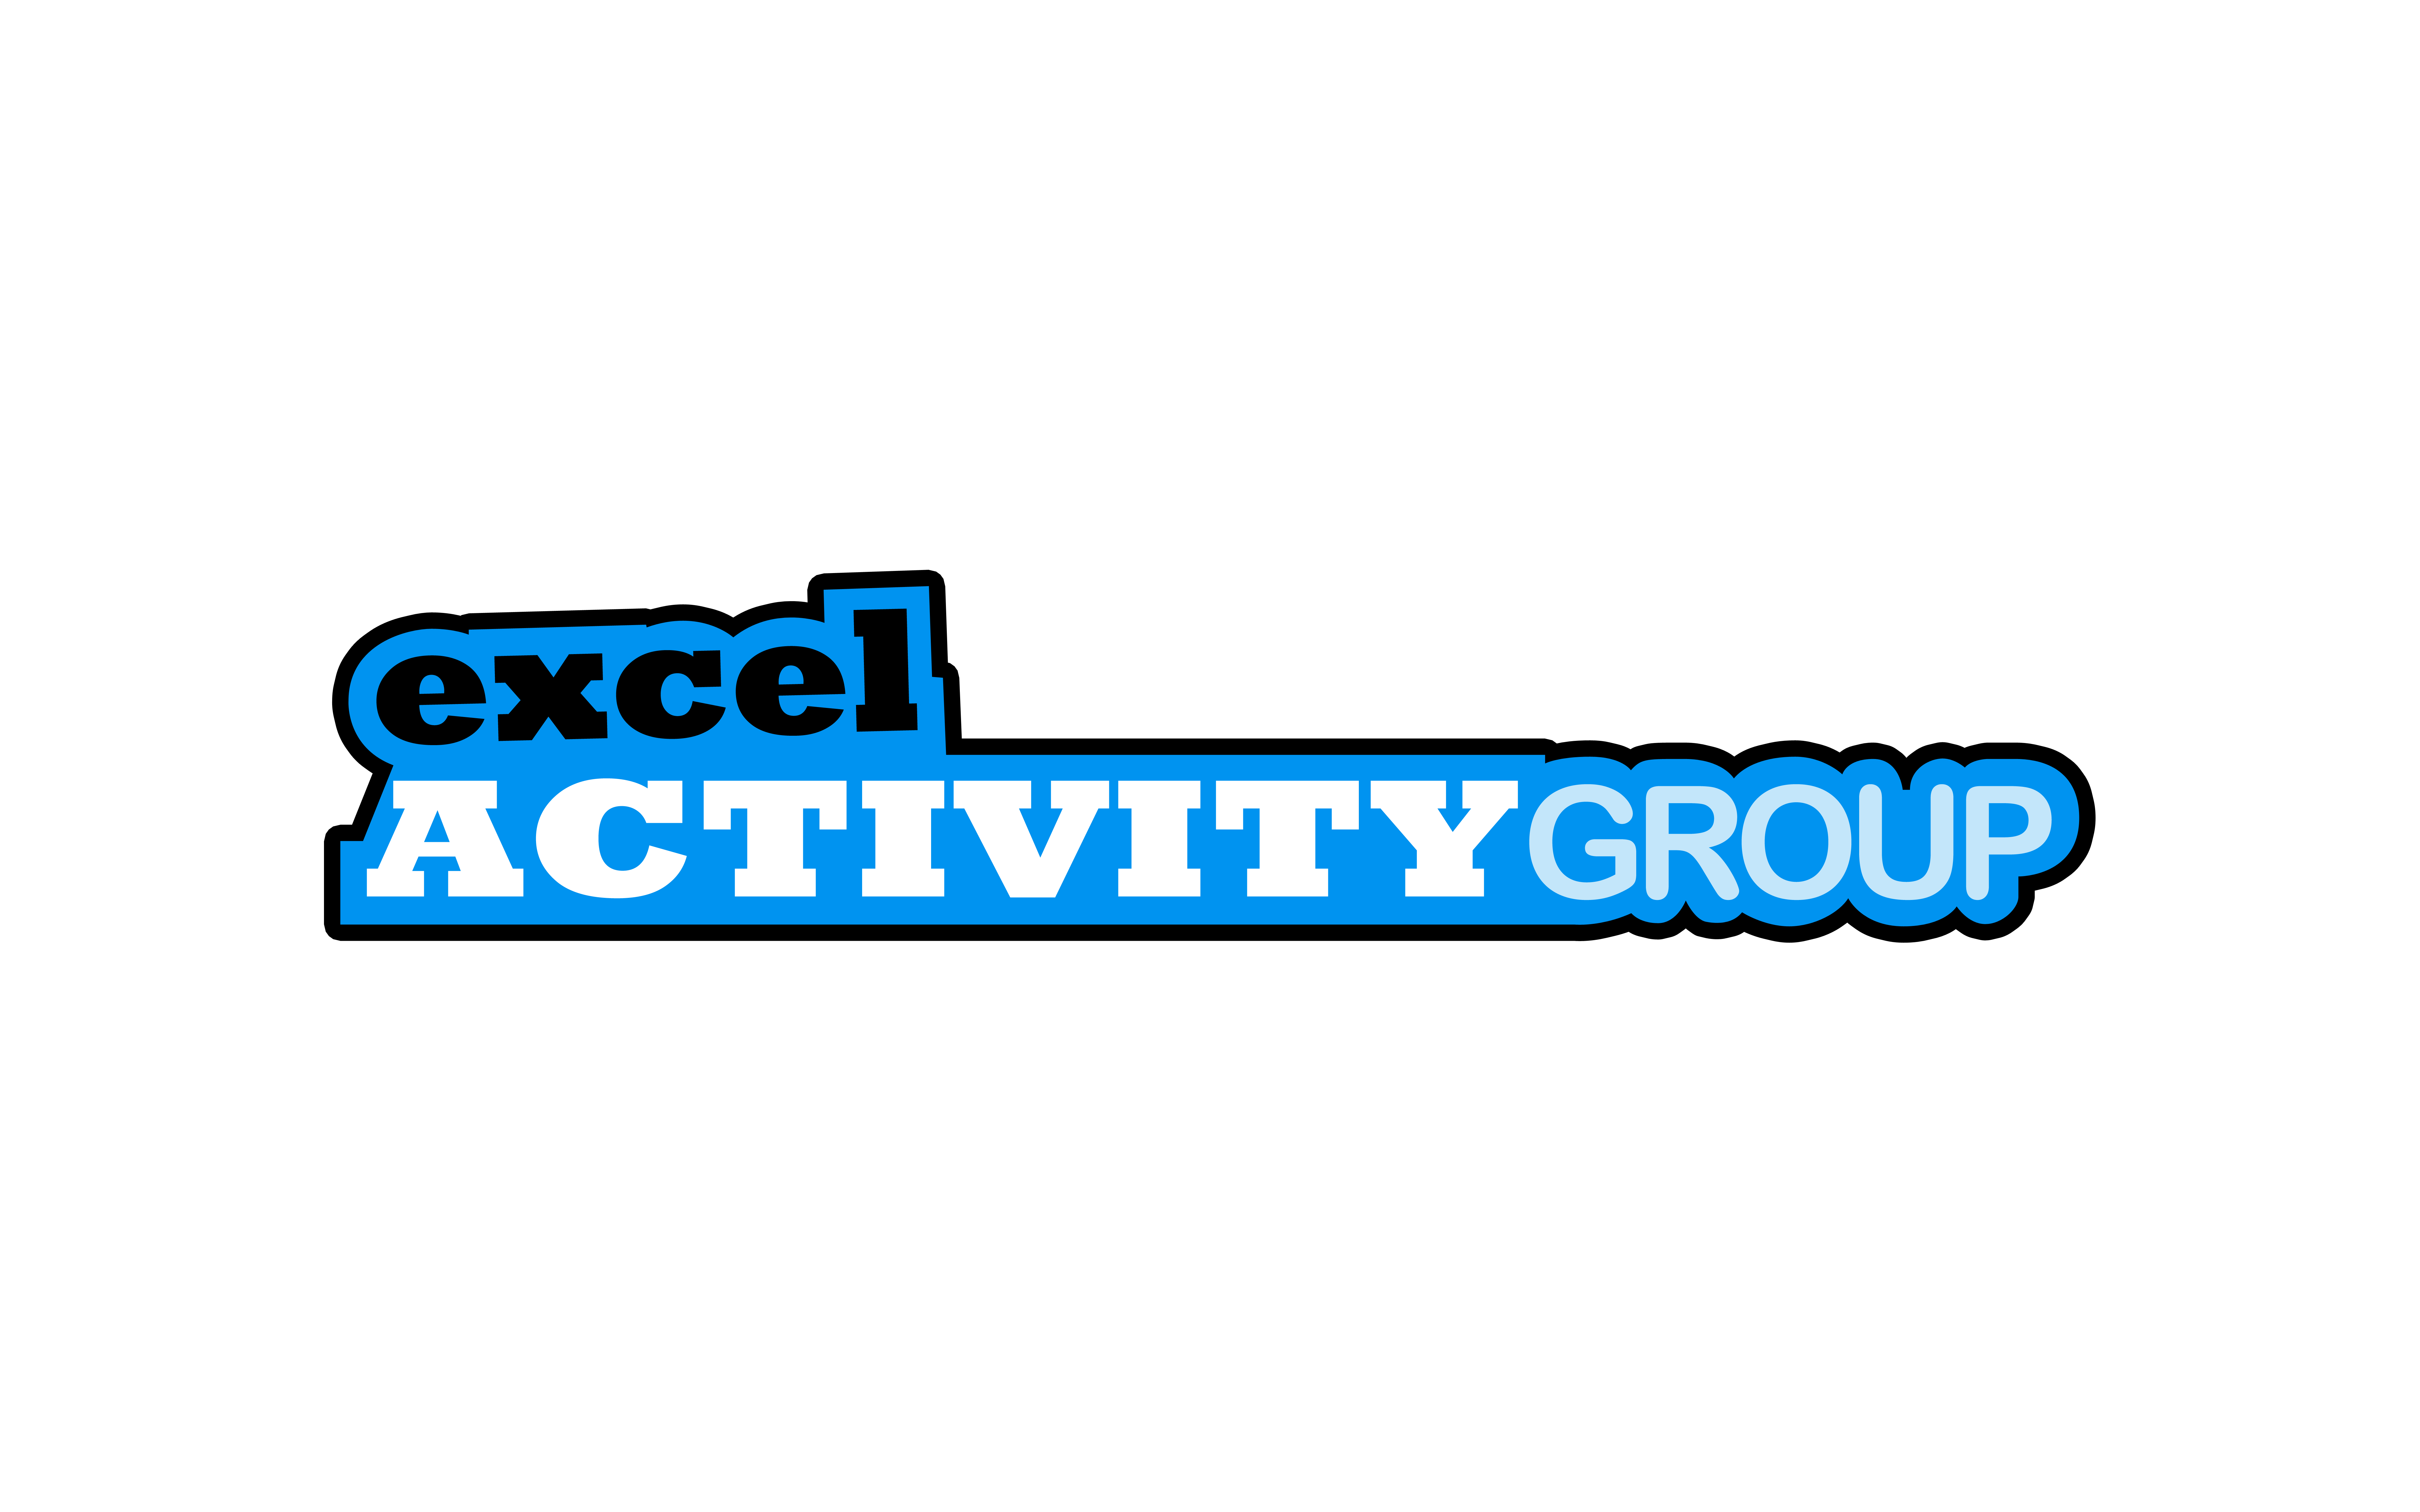 Excel Activity Group, Powerleague Shoreditch